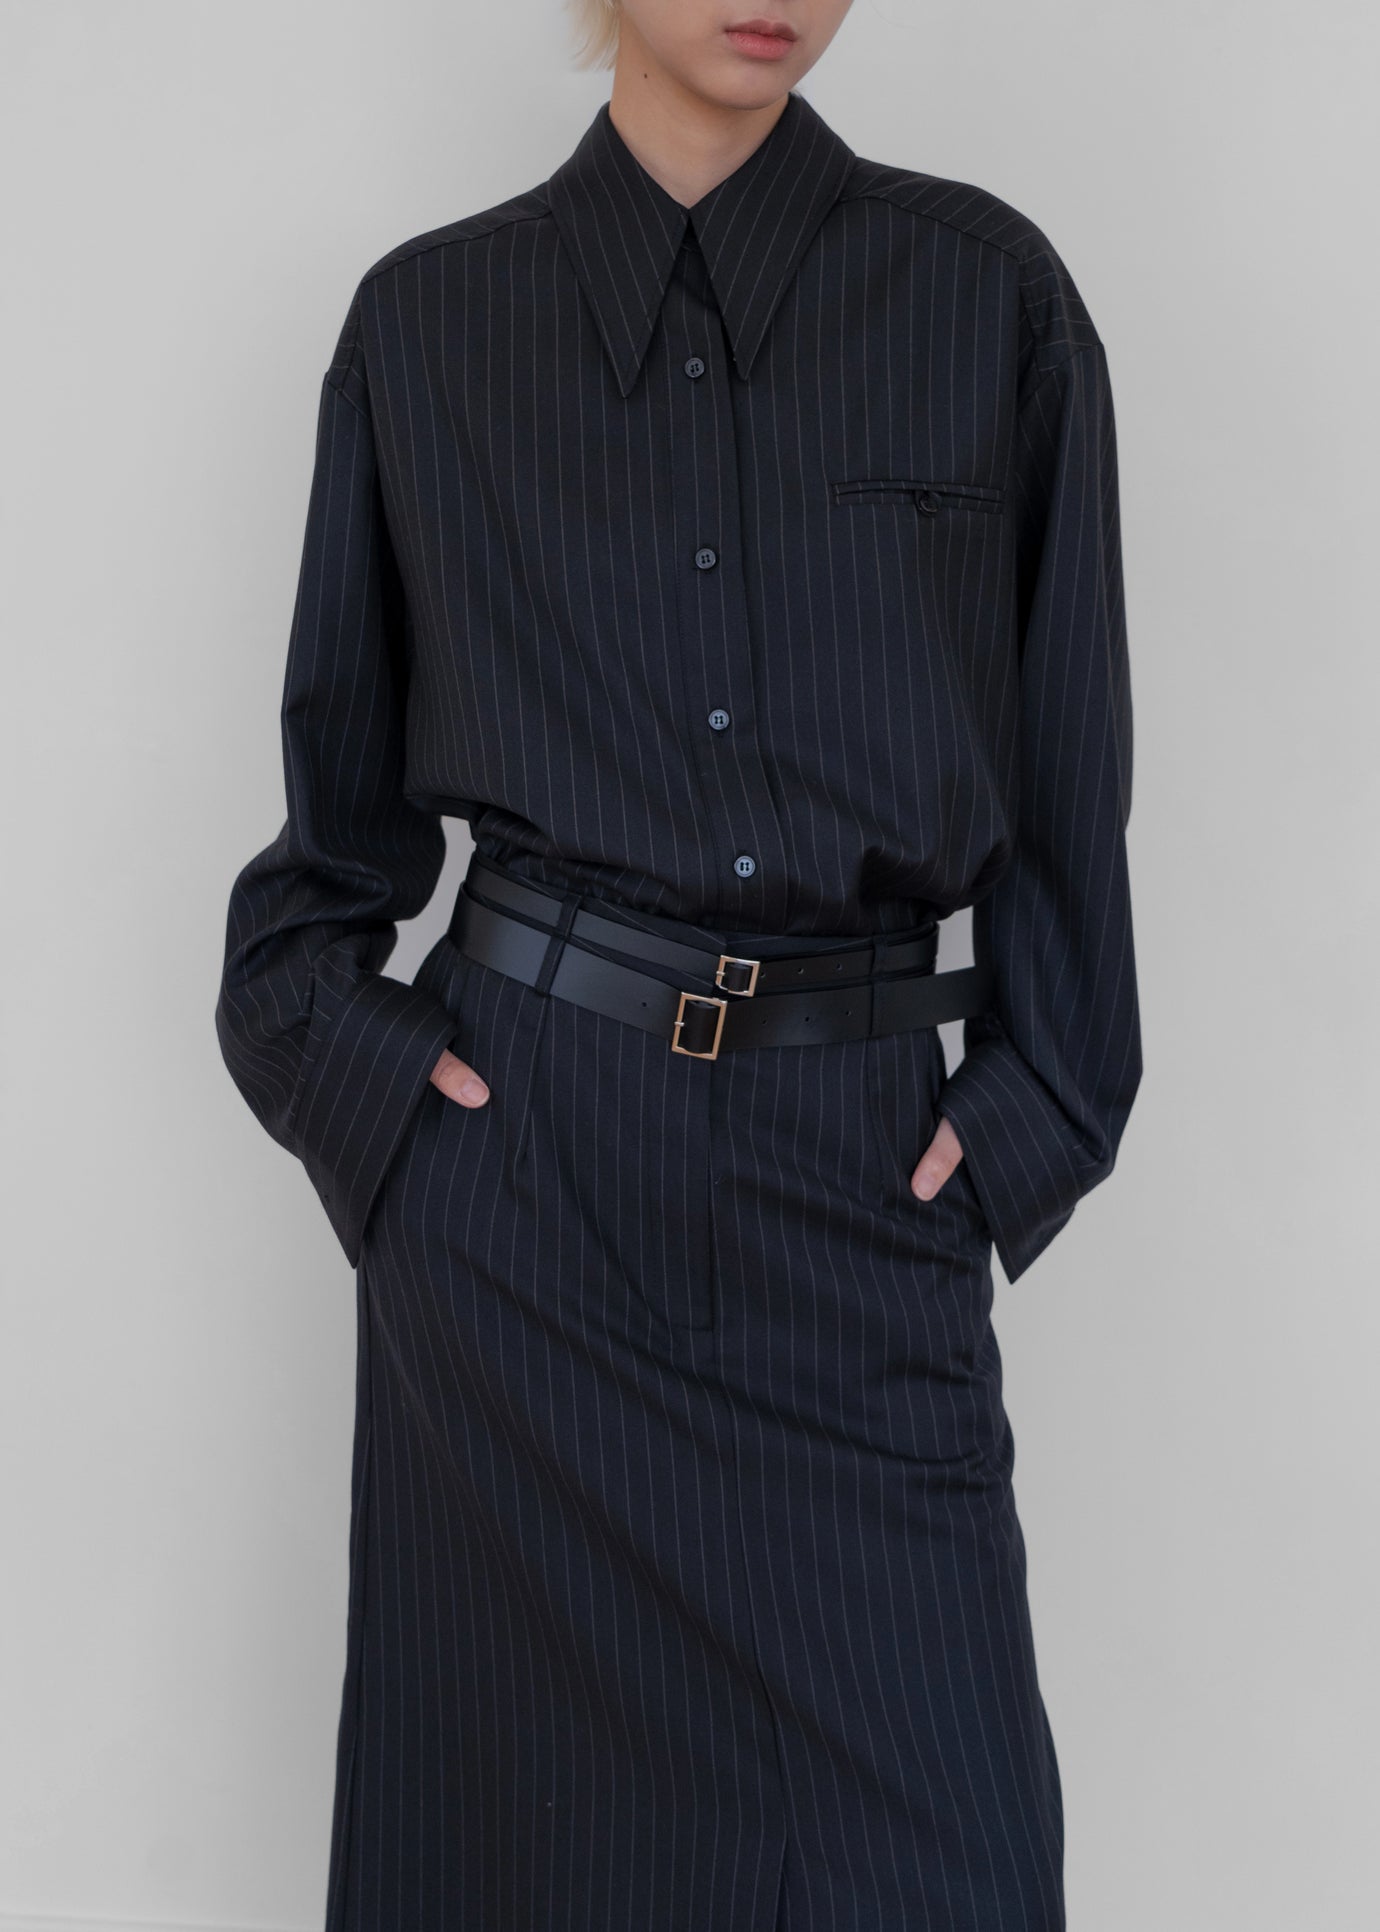 Kerry Button Up Shirt - Black Pinstripe